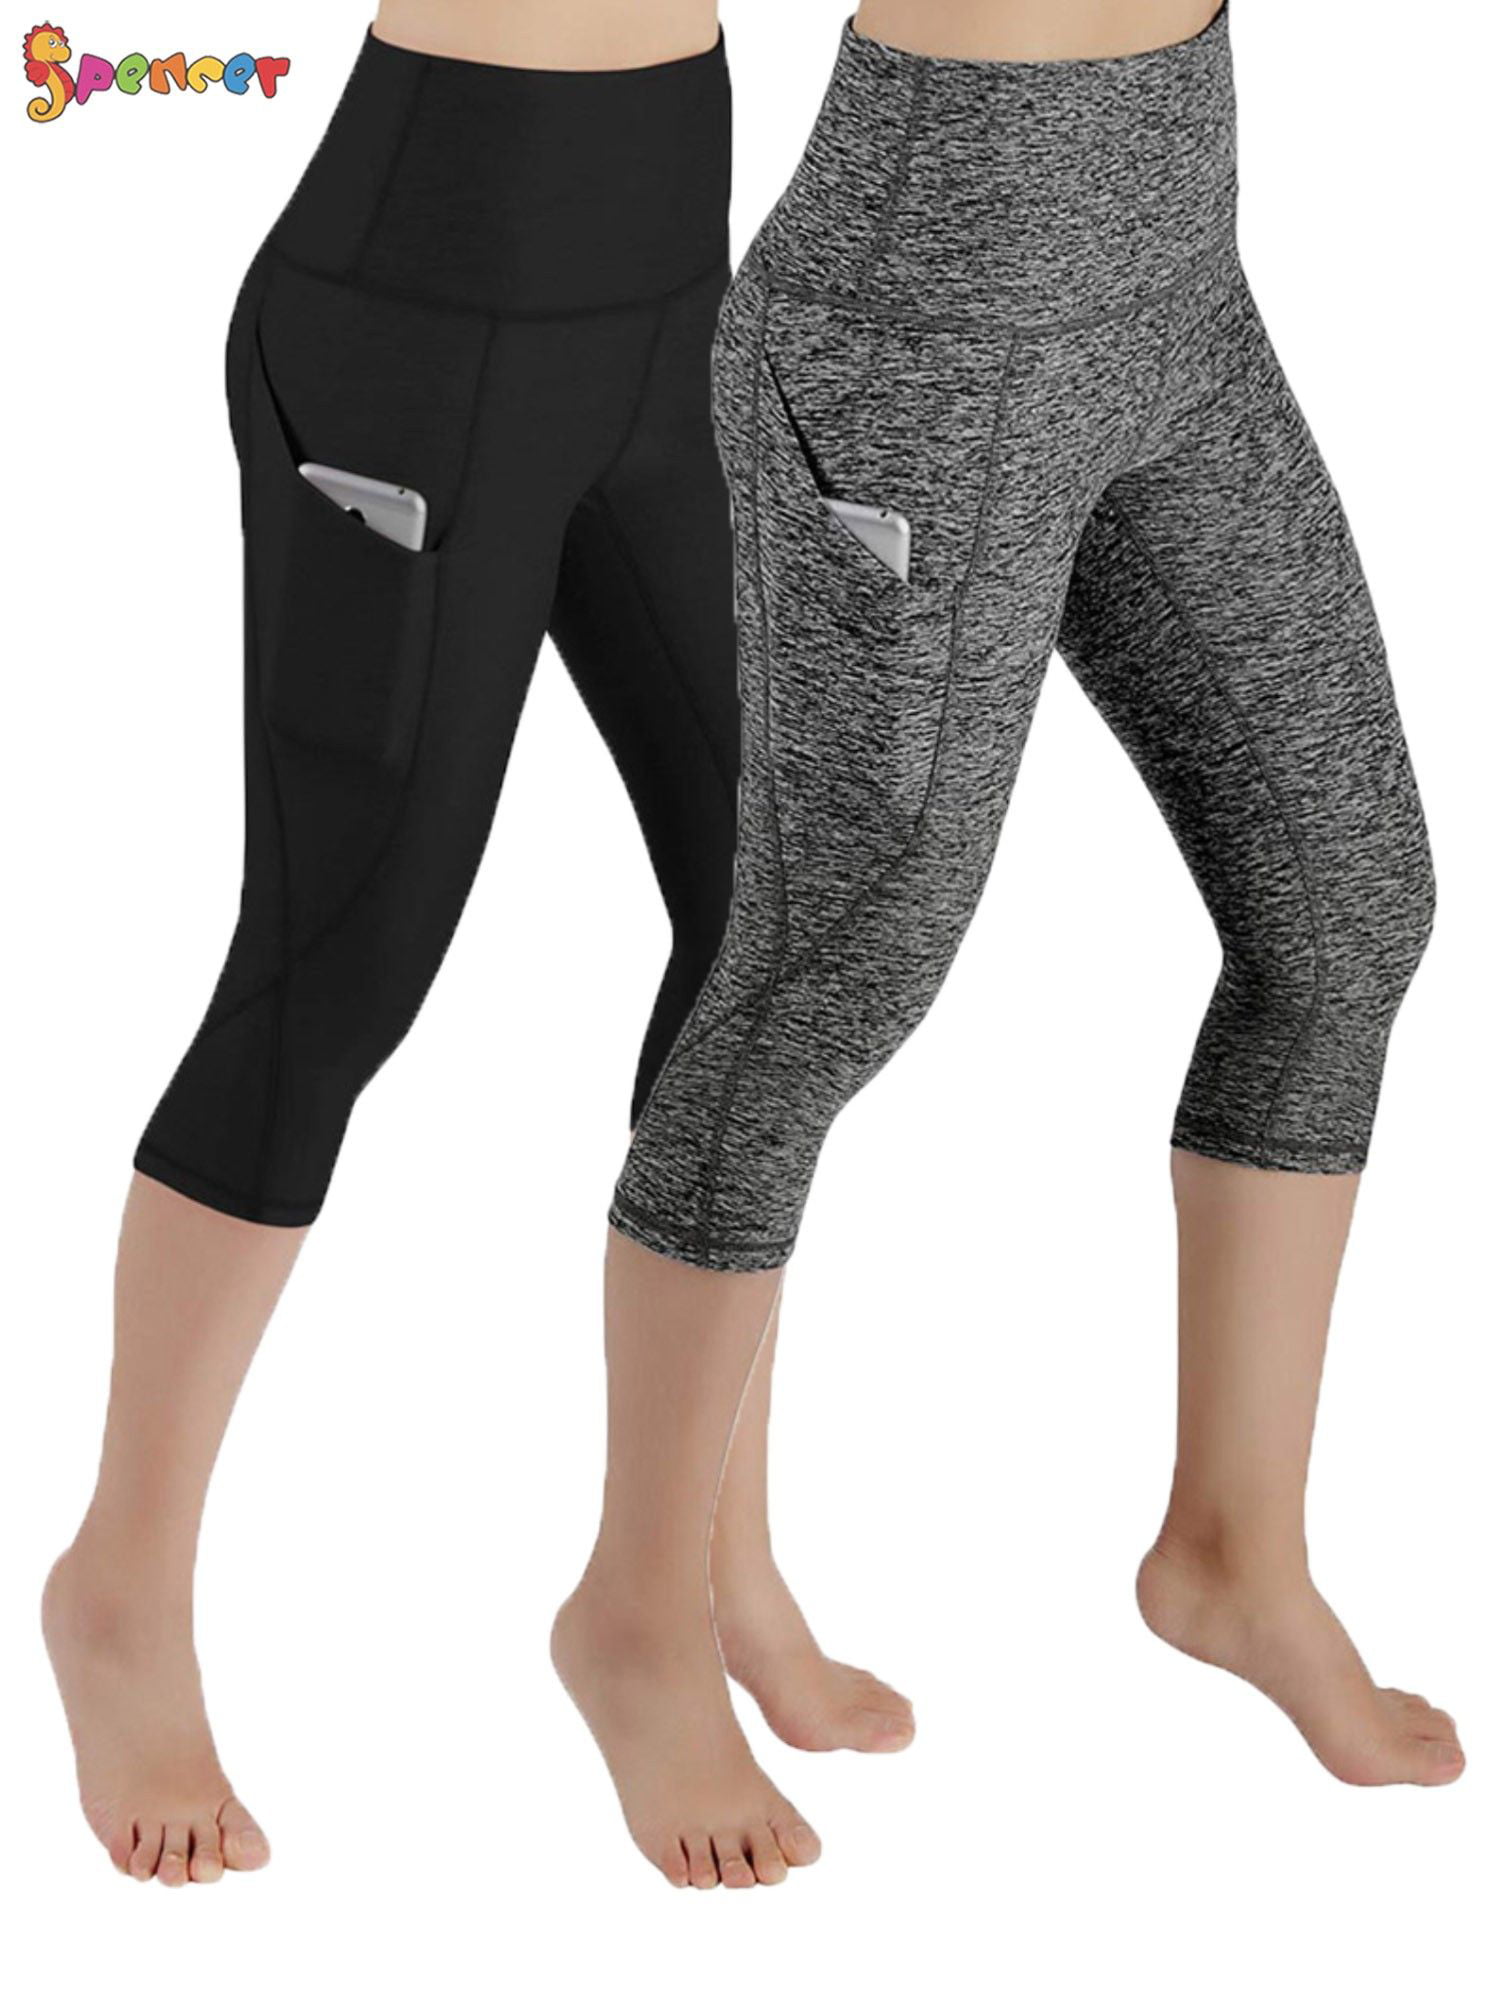 High Waist Yoga Capris Tummy Control Workout Running 4 Way Stretch Yoga Pants,Leggings 